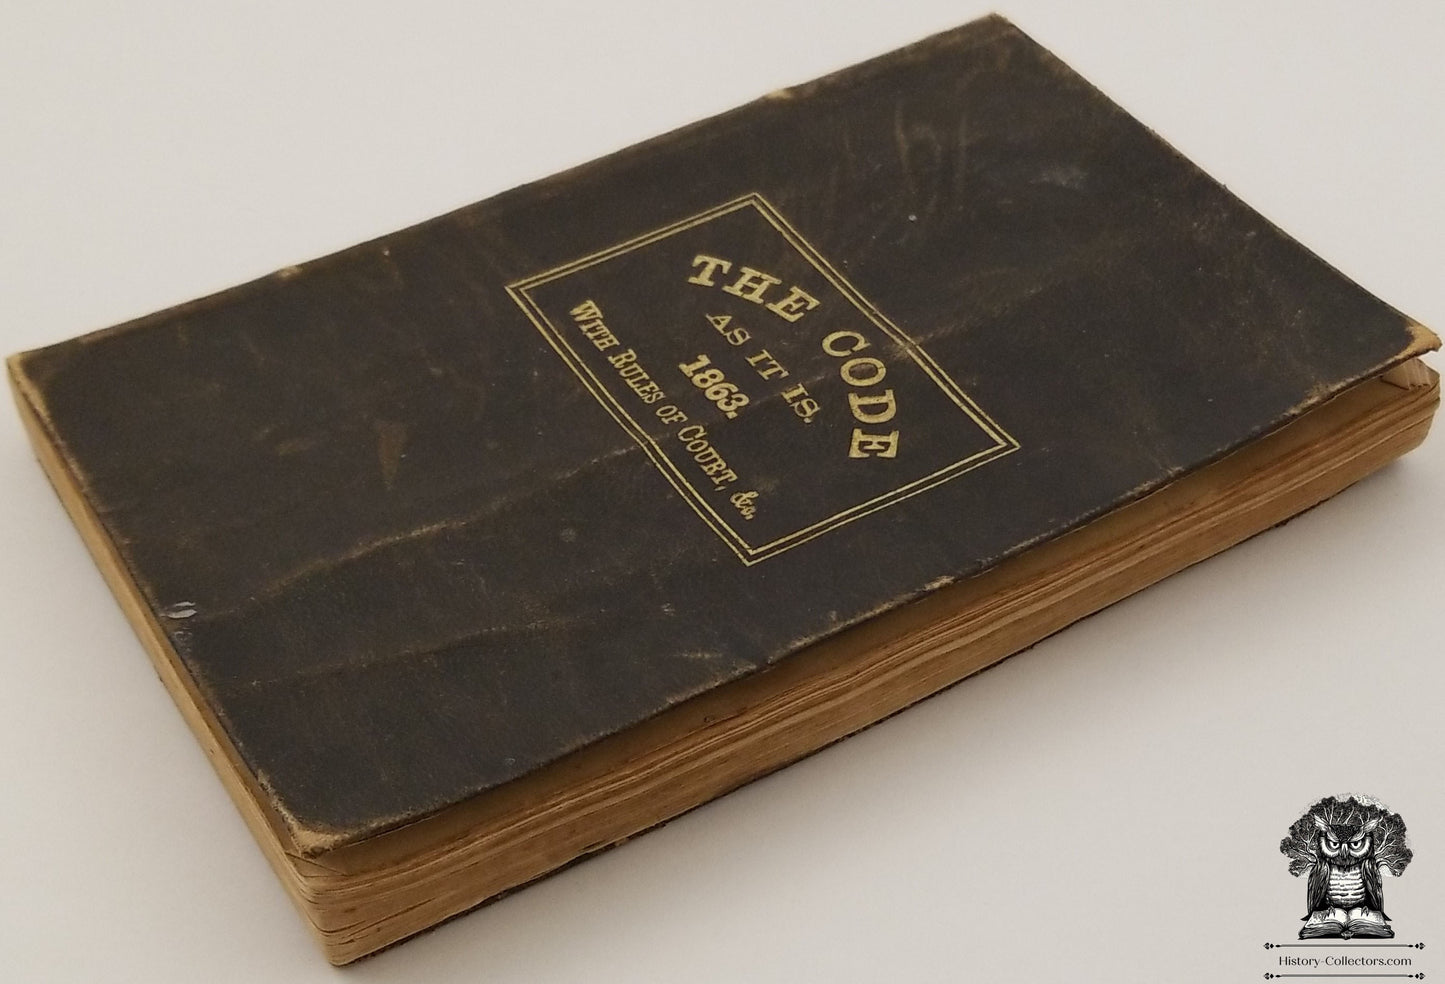 1863 State of New York Code of Procedure Rule of Court Law Book - Civil War Era